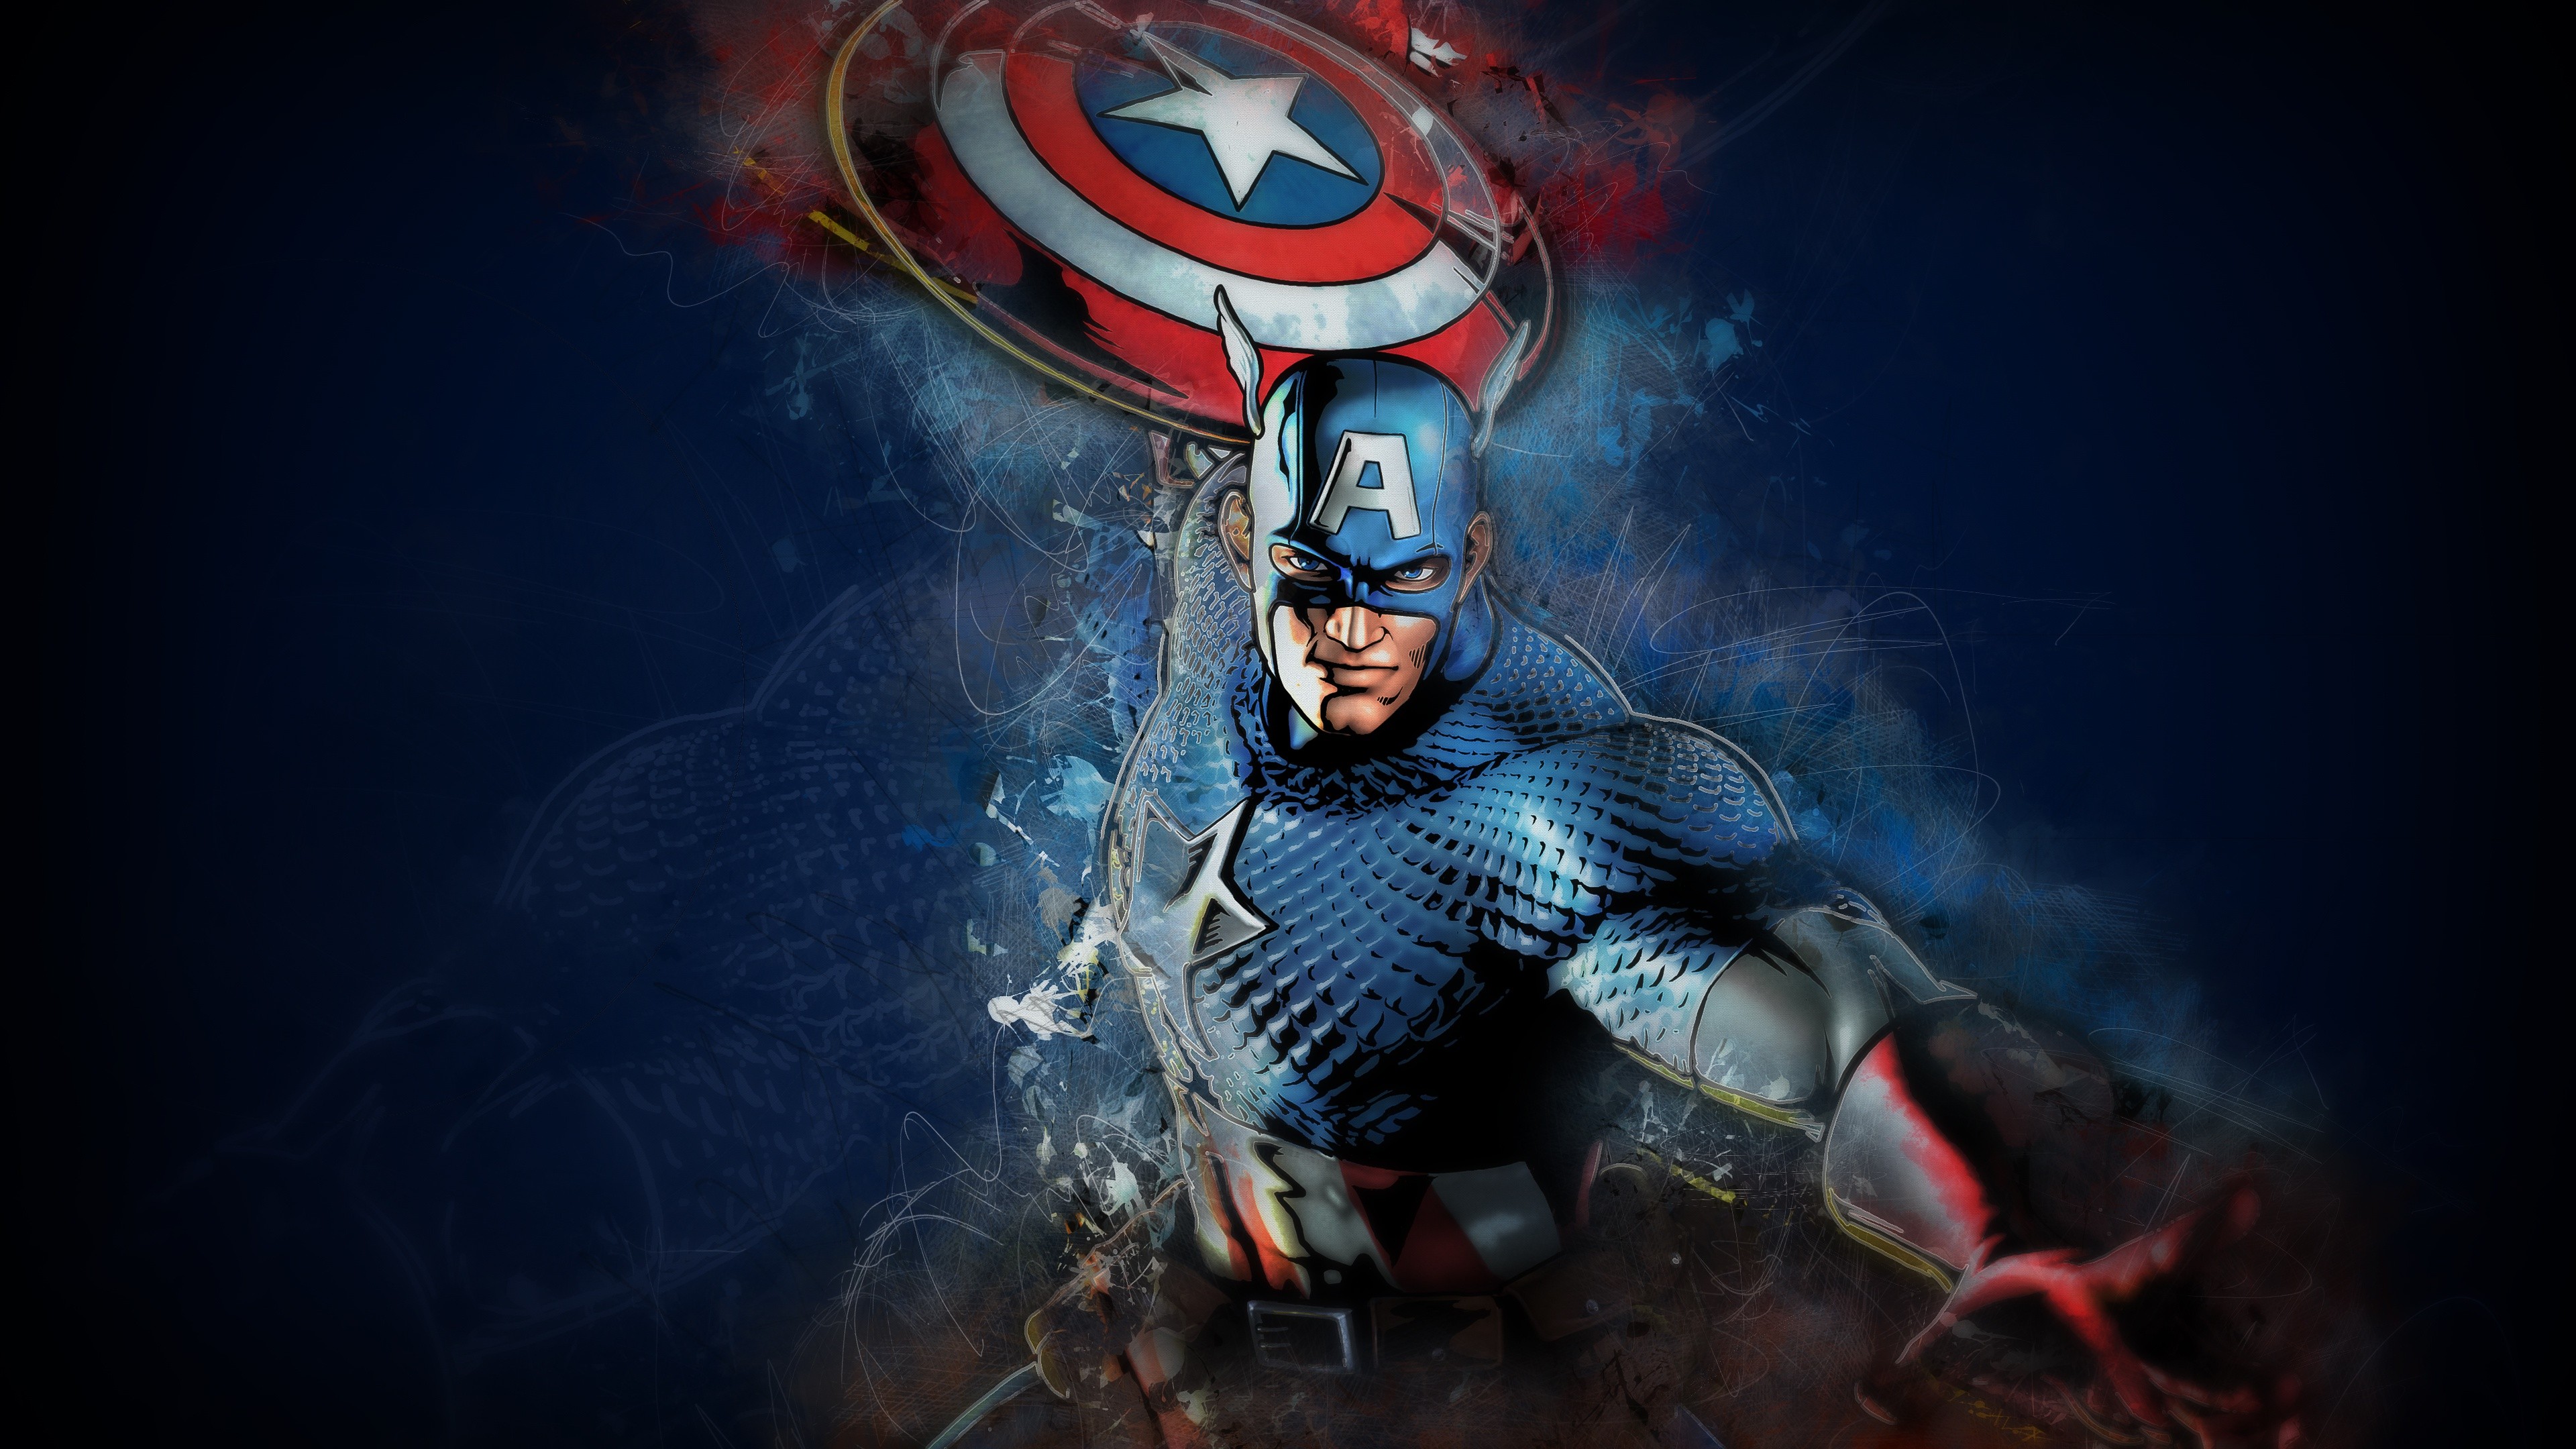 Captain America 4K IPhone Wallpaper  IPhone Wallpapers  iPhone Wallpapers